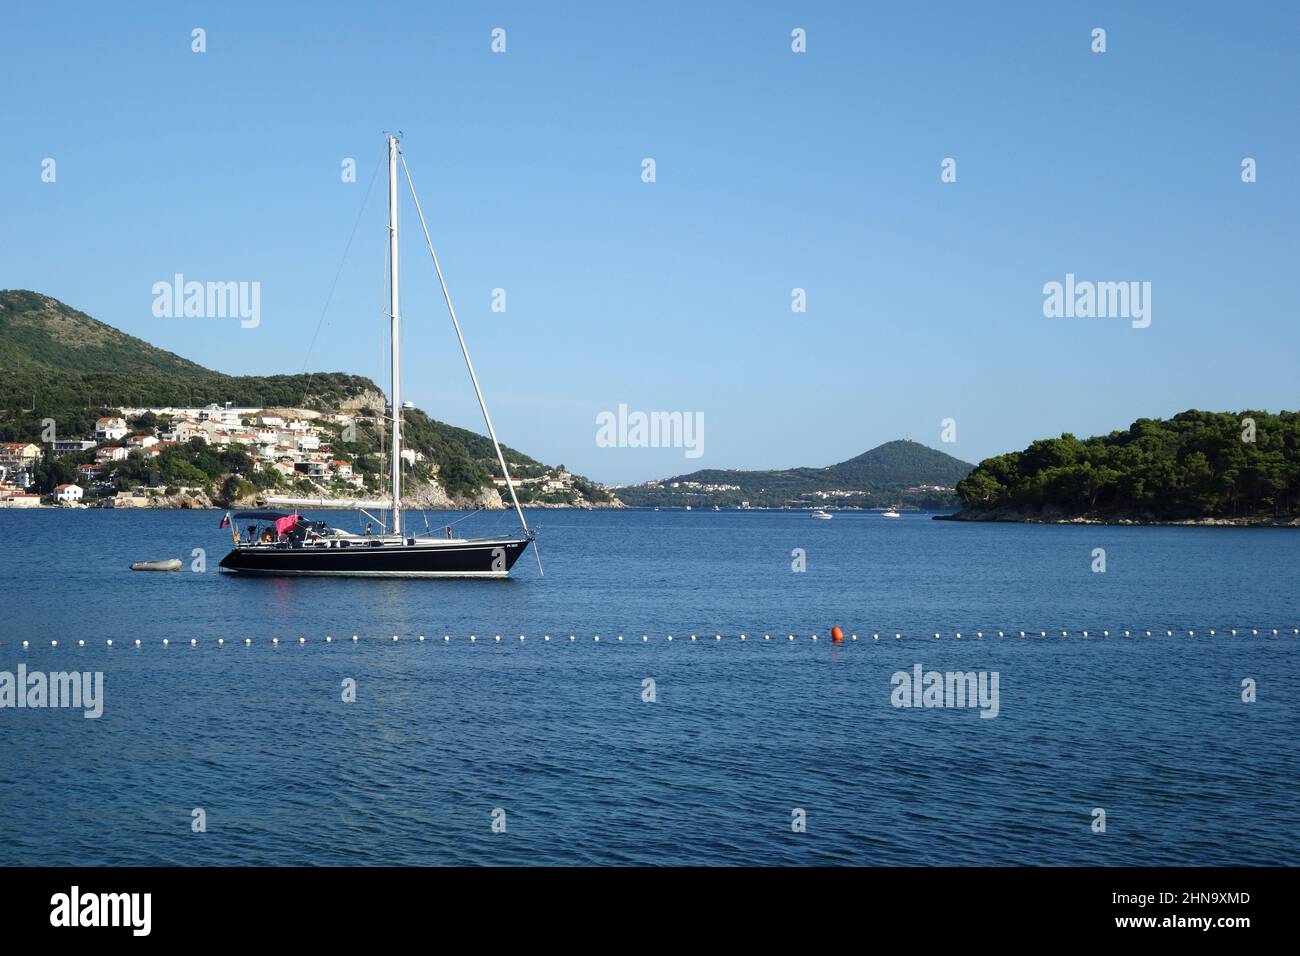 Boat moored in the picturesque Zaton Bay, Croatia. Stock Photo